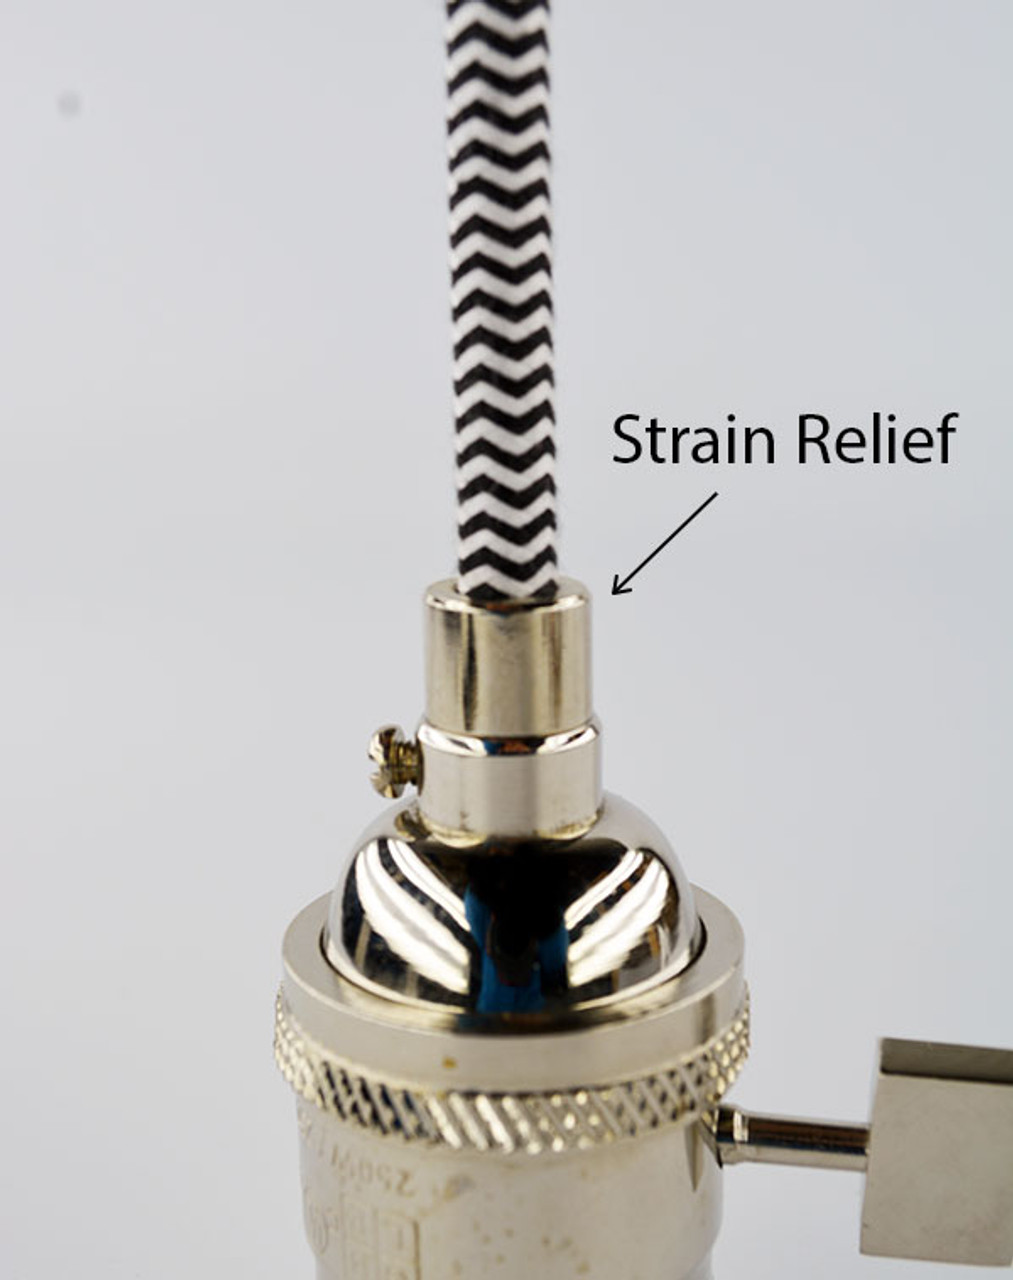 100 Pcs strain relief cord connector lamp cord strain relief Connectors